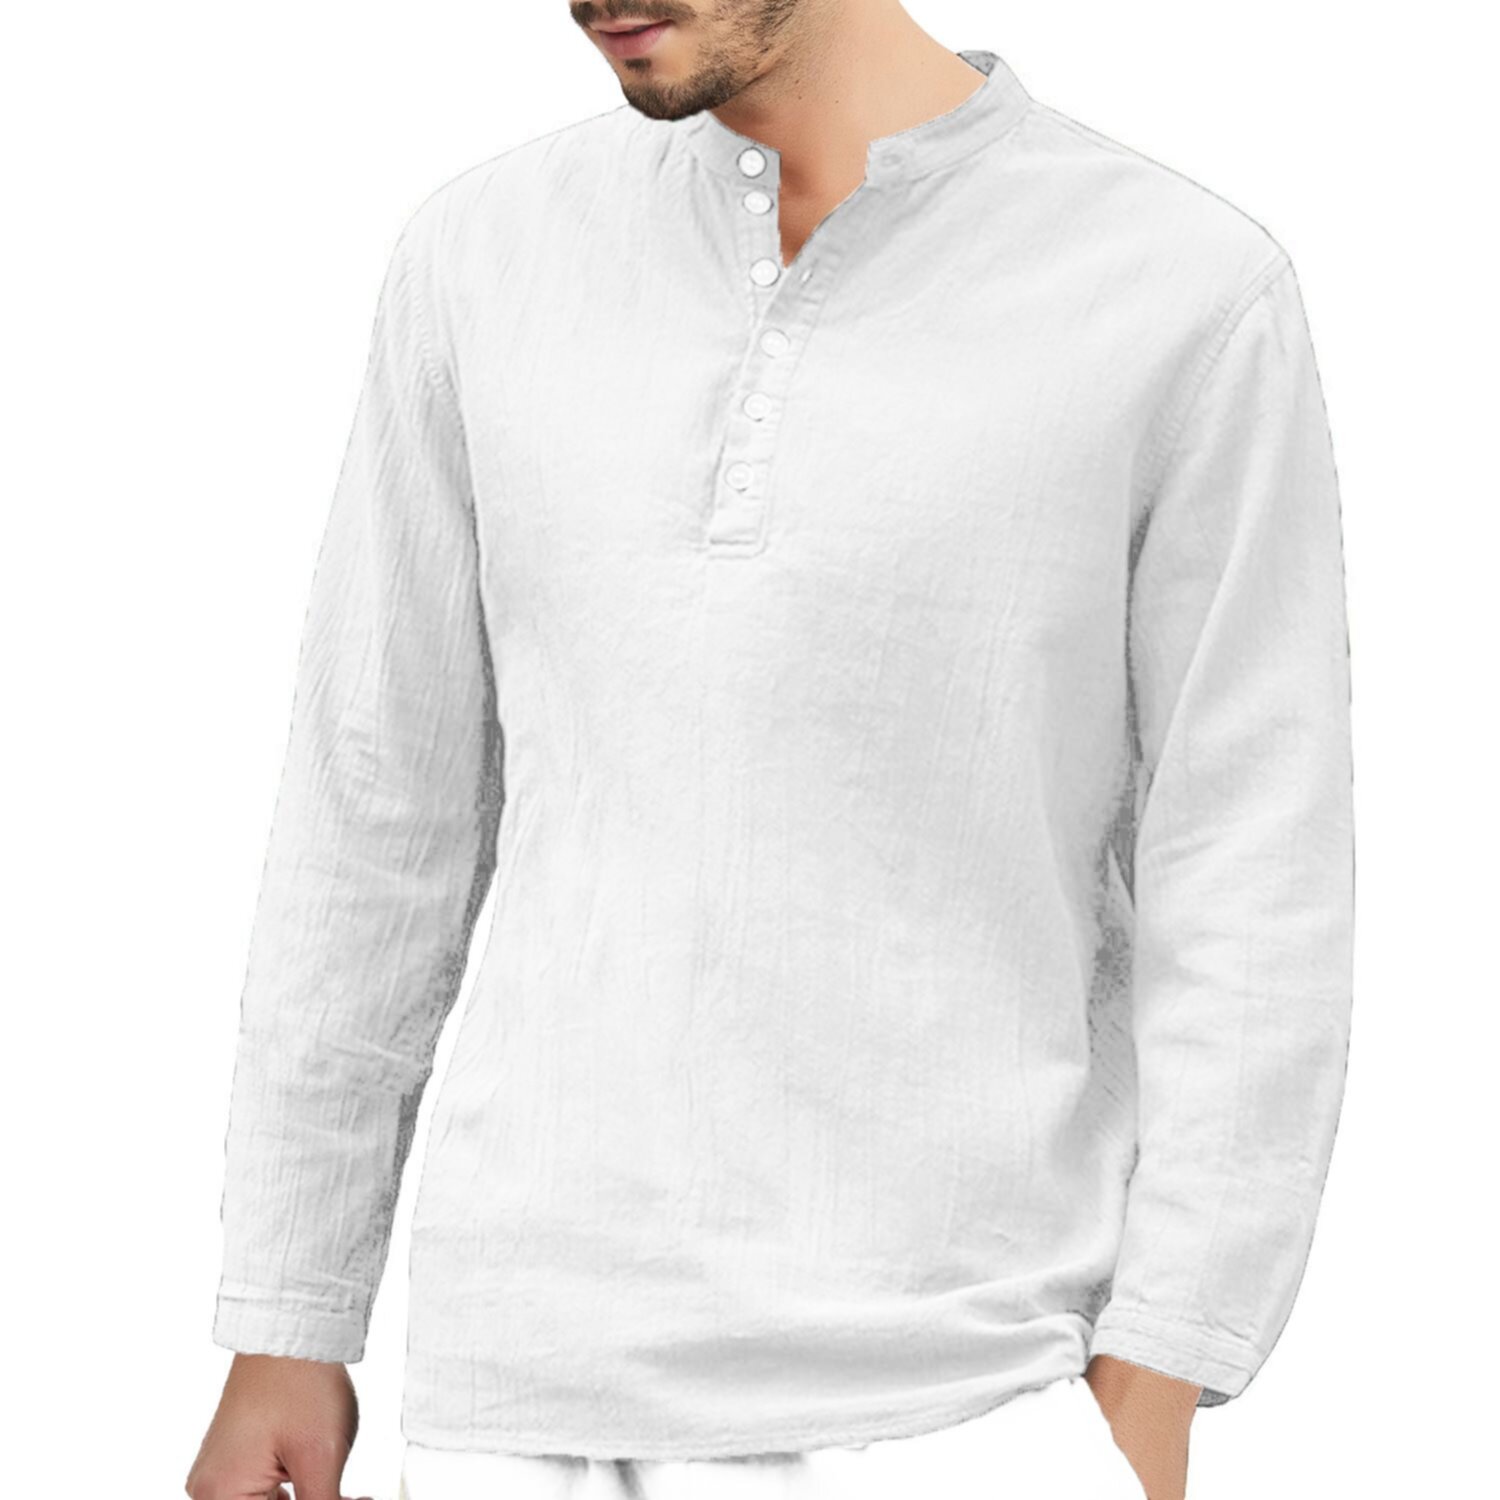 Solid cotton linen long sleeve round neck button shirt